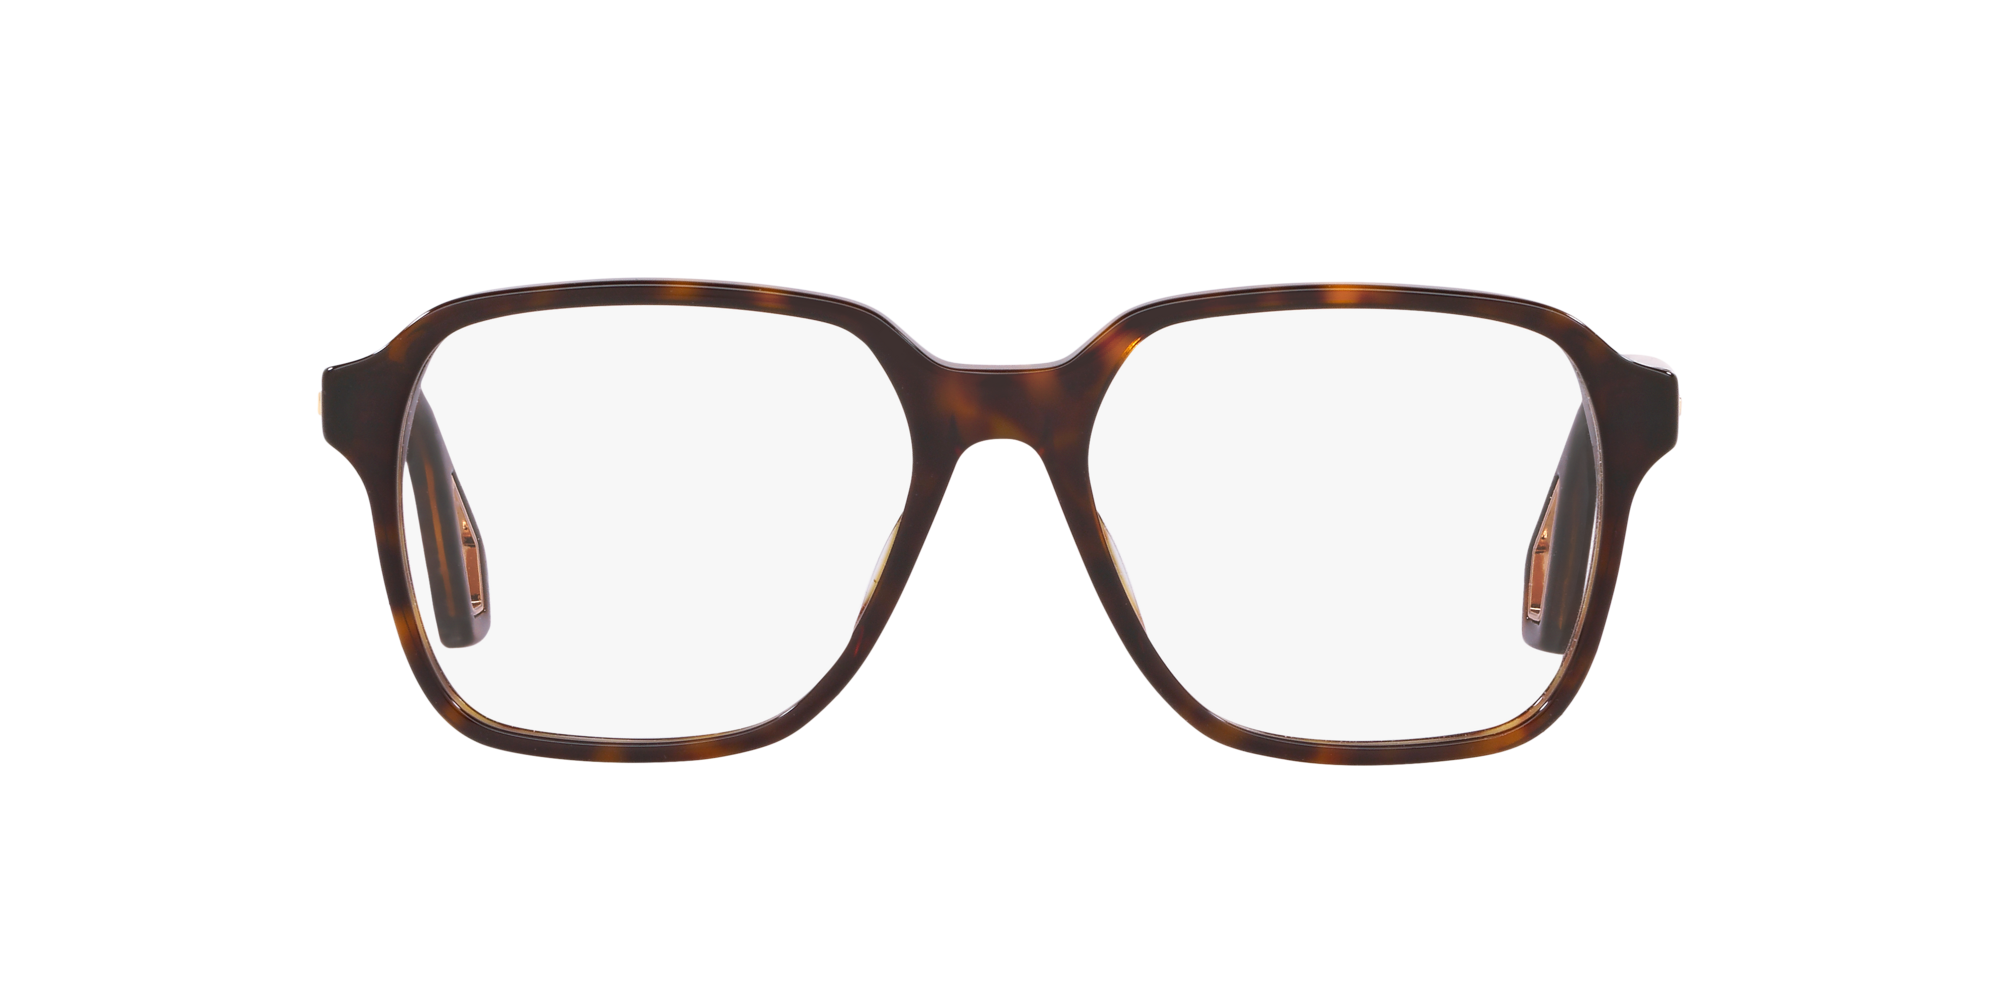 lenscrafters gucci frames